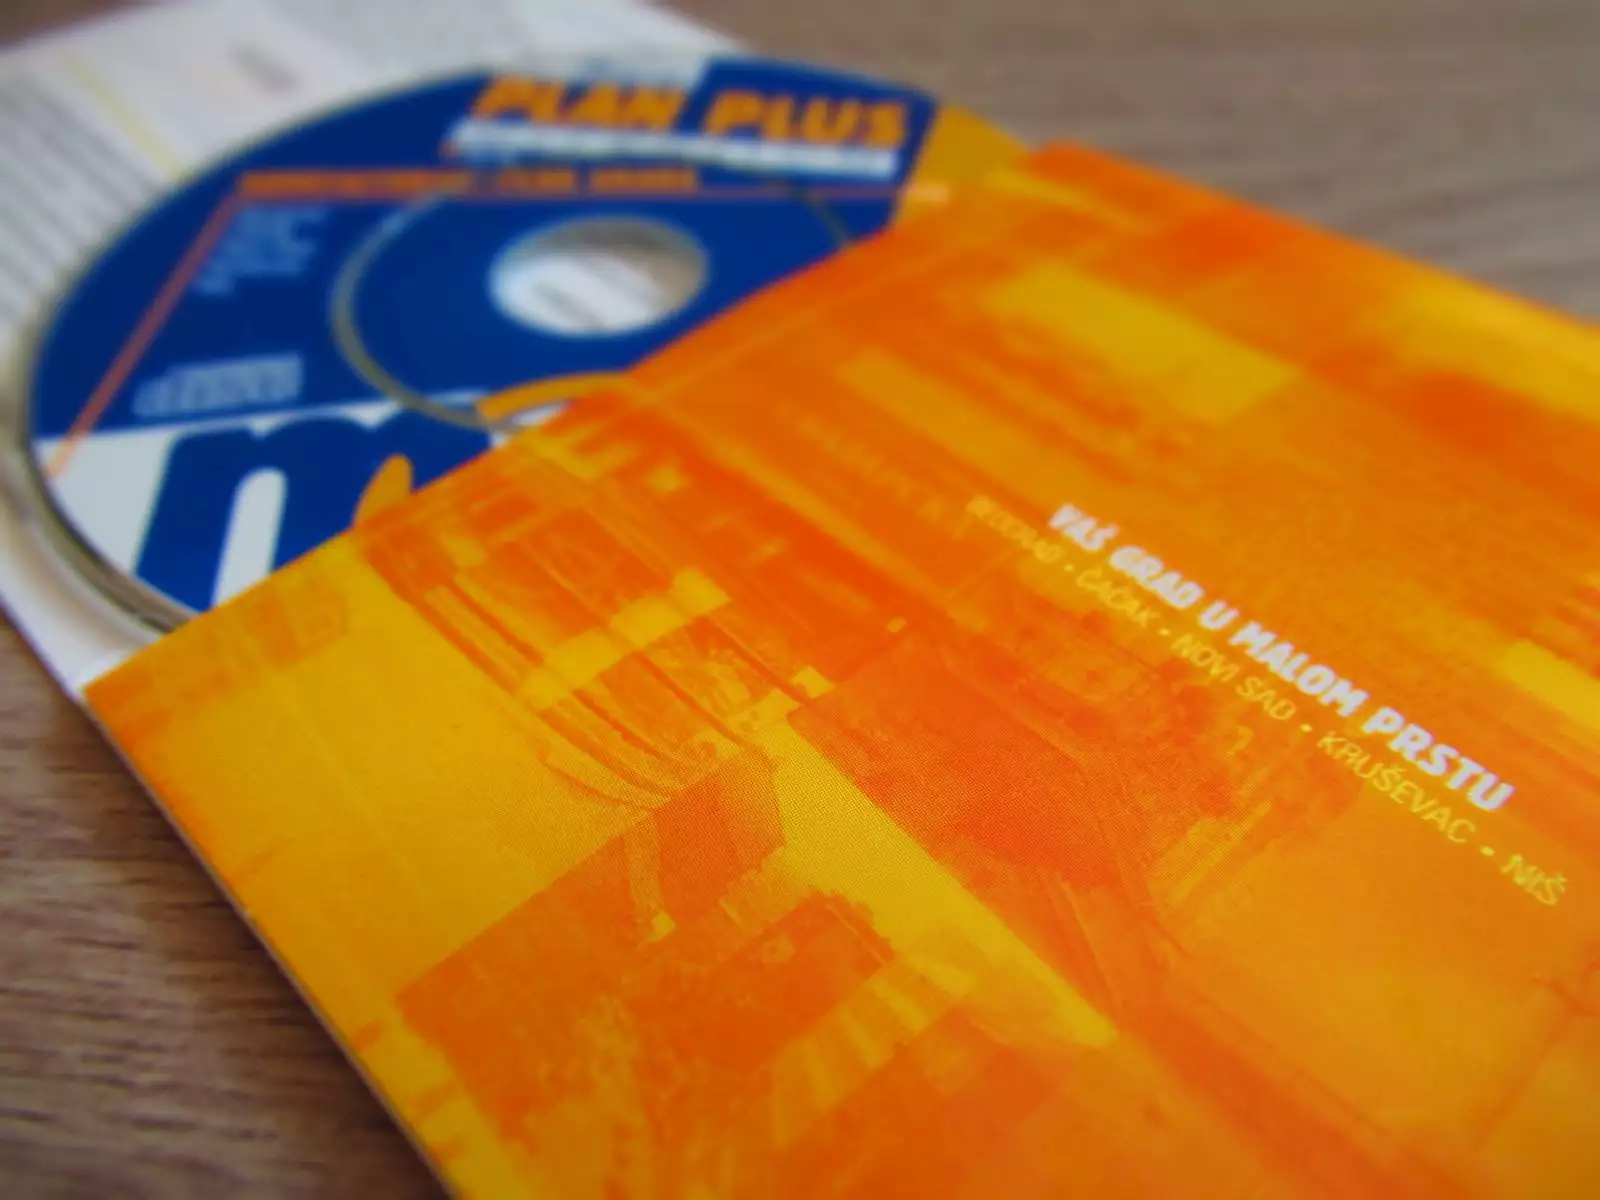 PlanPlus on mini-CD in 2000